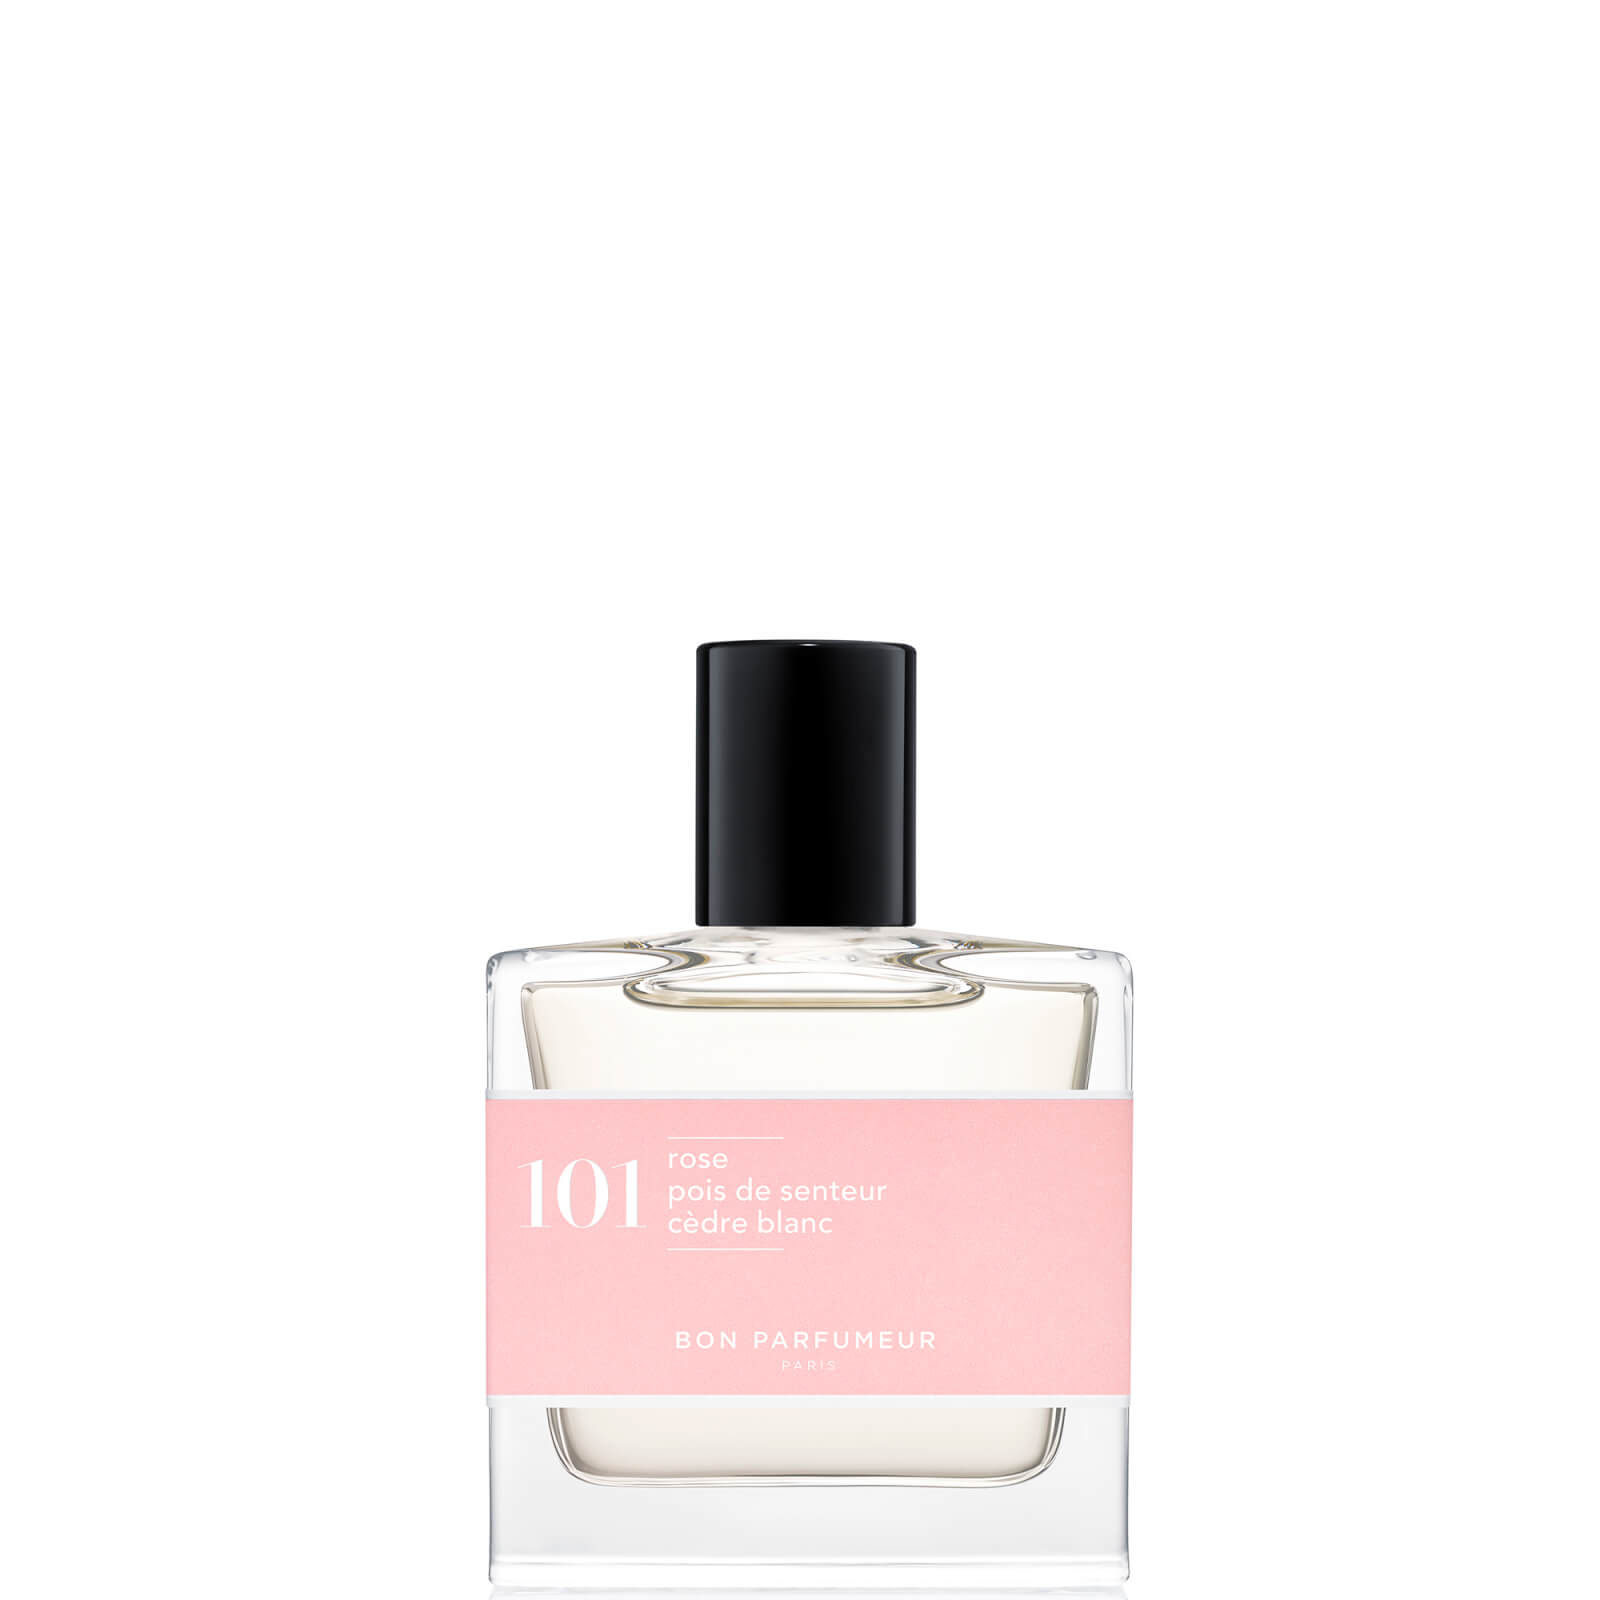 Photos - Women's Fragrance Bon Parfumeur 101 Rose Sweet Pea White Cedar Eau de Parfum - 30ml BP101EDP 